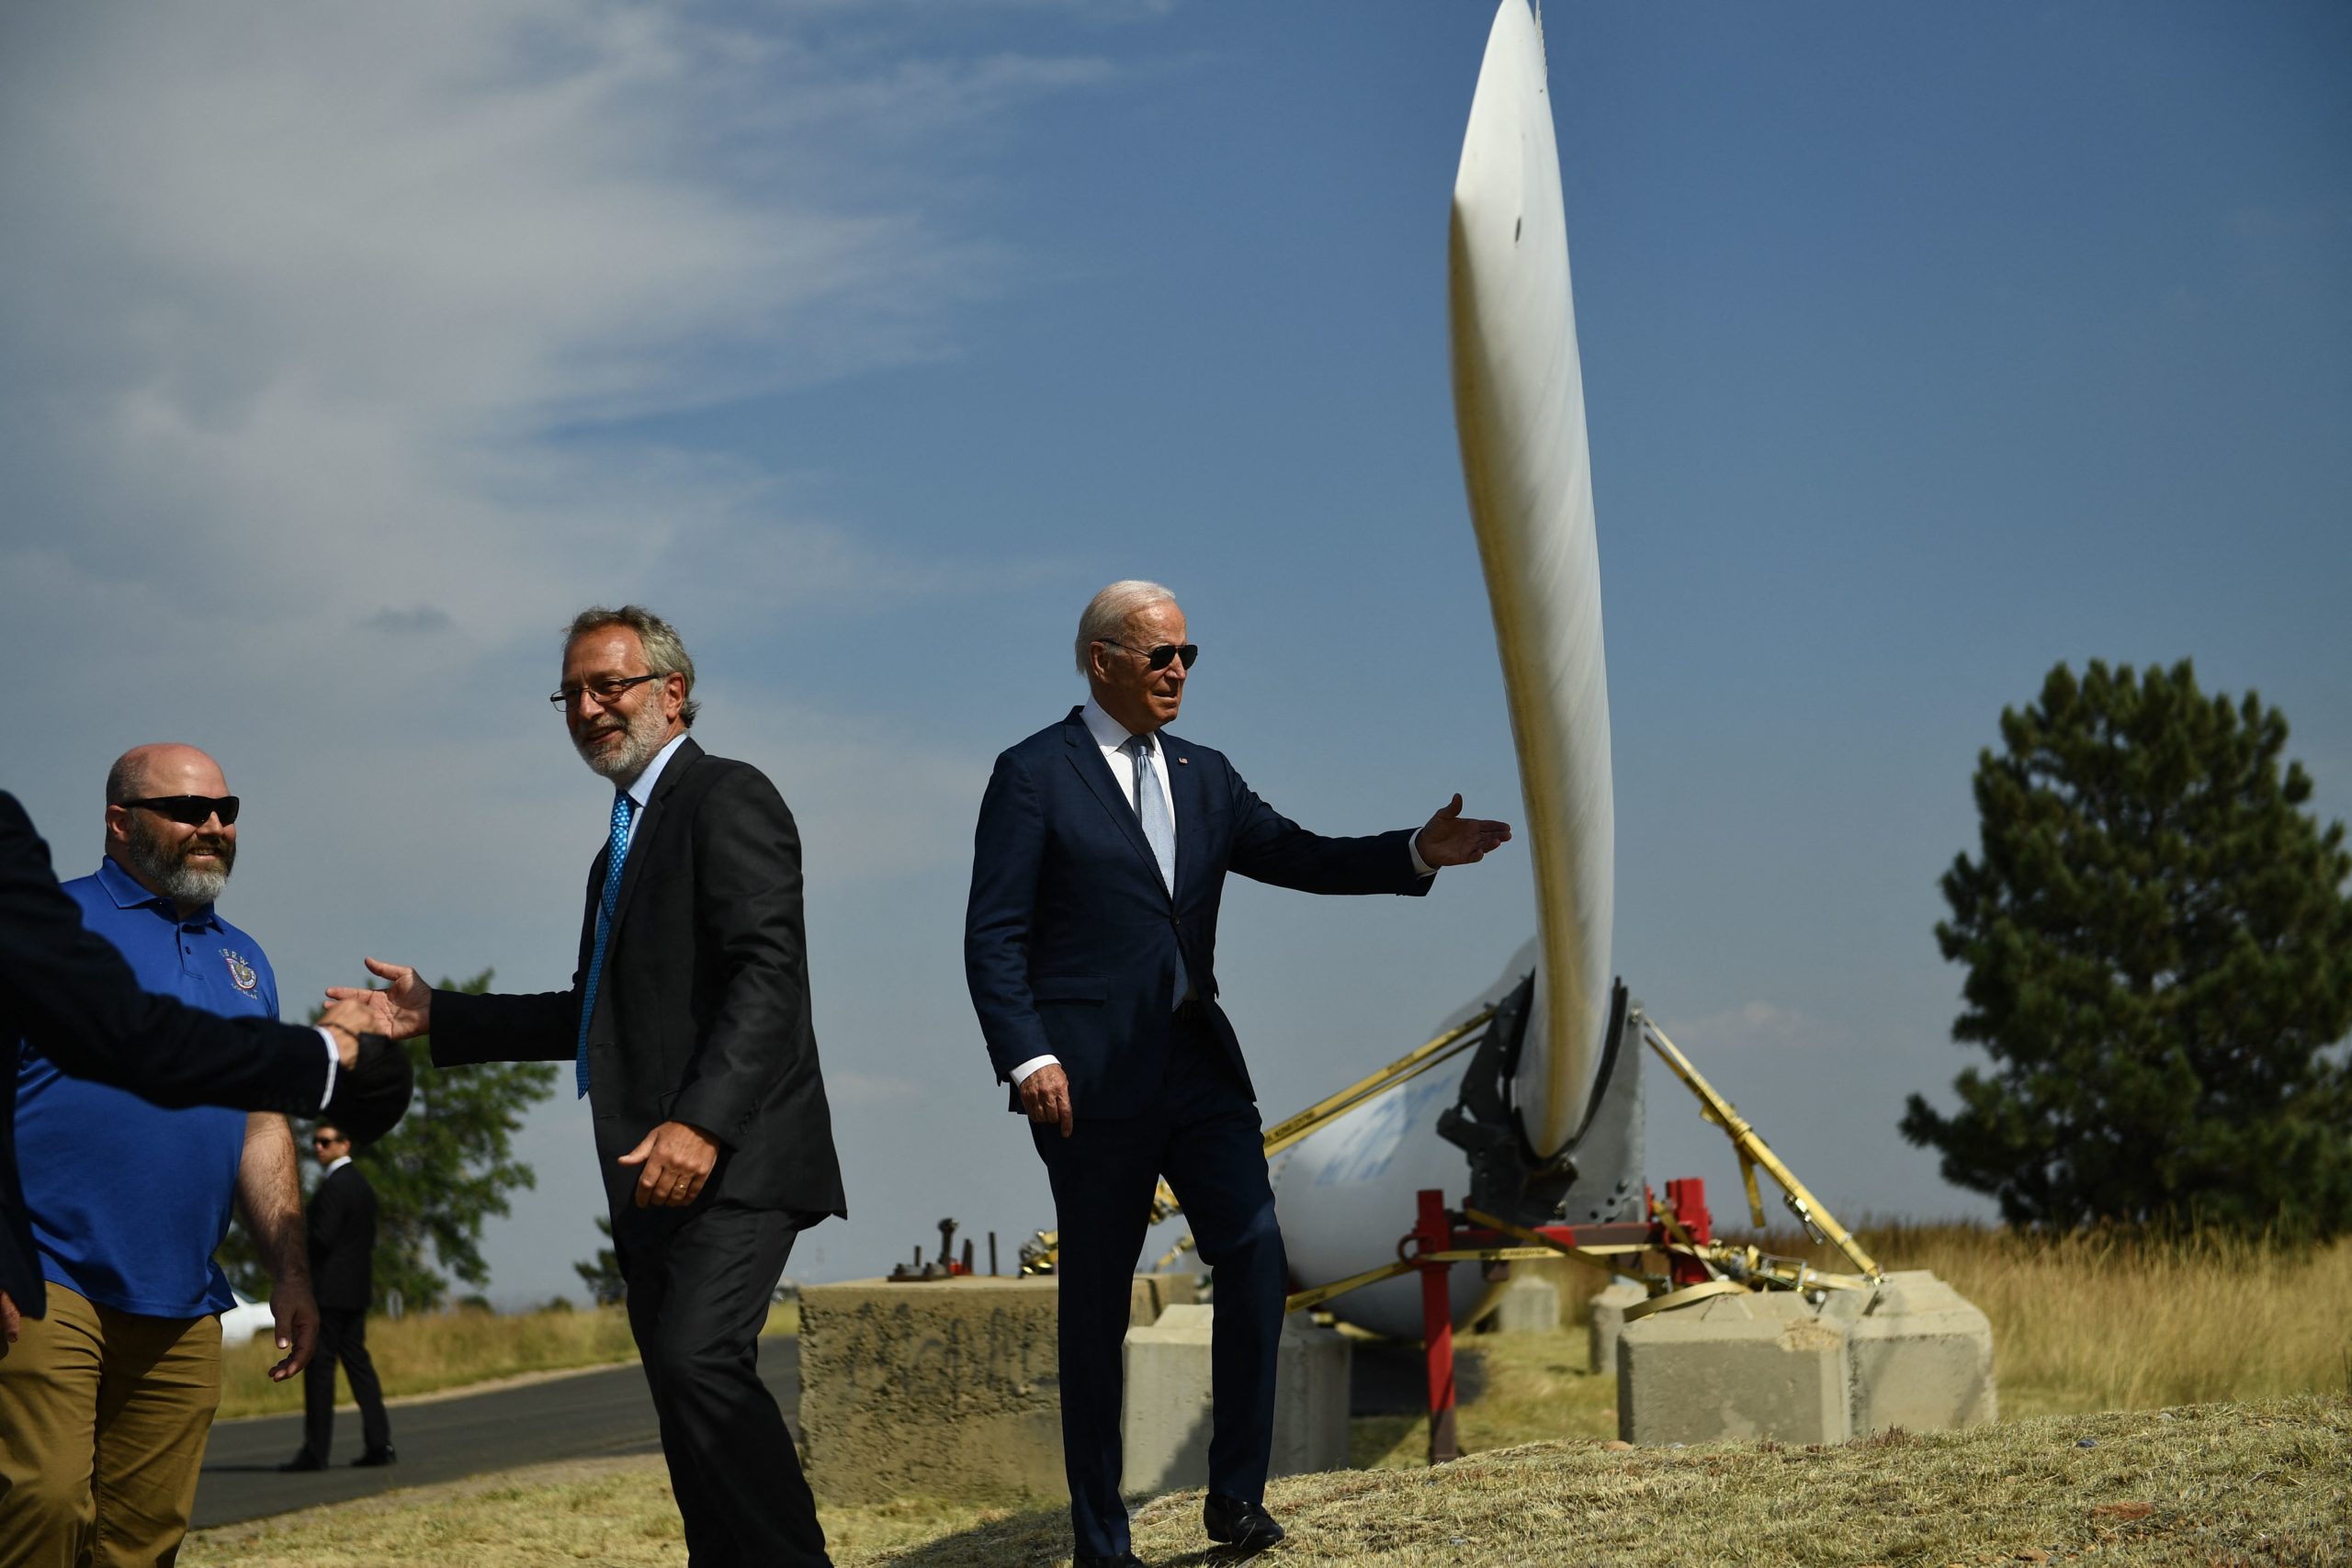 President Joe Biden looks at a wind turbine blade as he tours the National Renewable Energy Laboratory in Arvada, Colorado, on Sept. 14. (Brendan Smialowski/AFP via Getty Images)